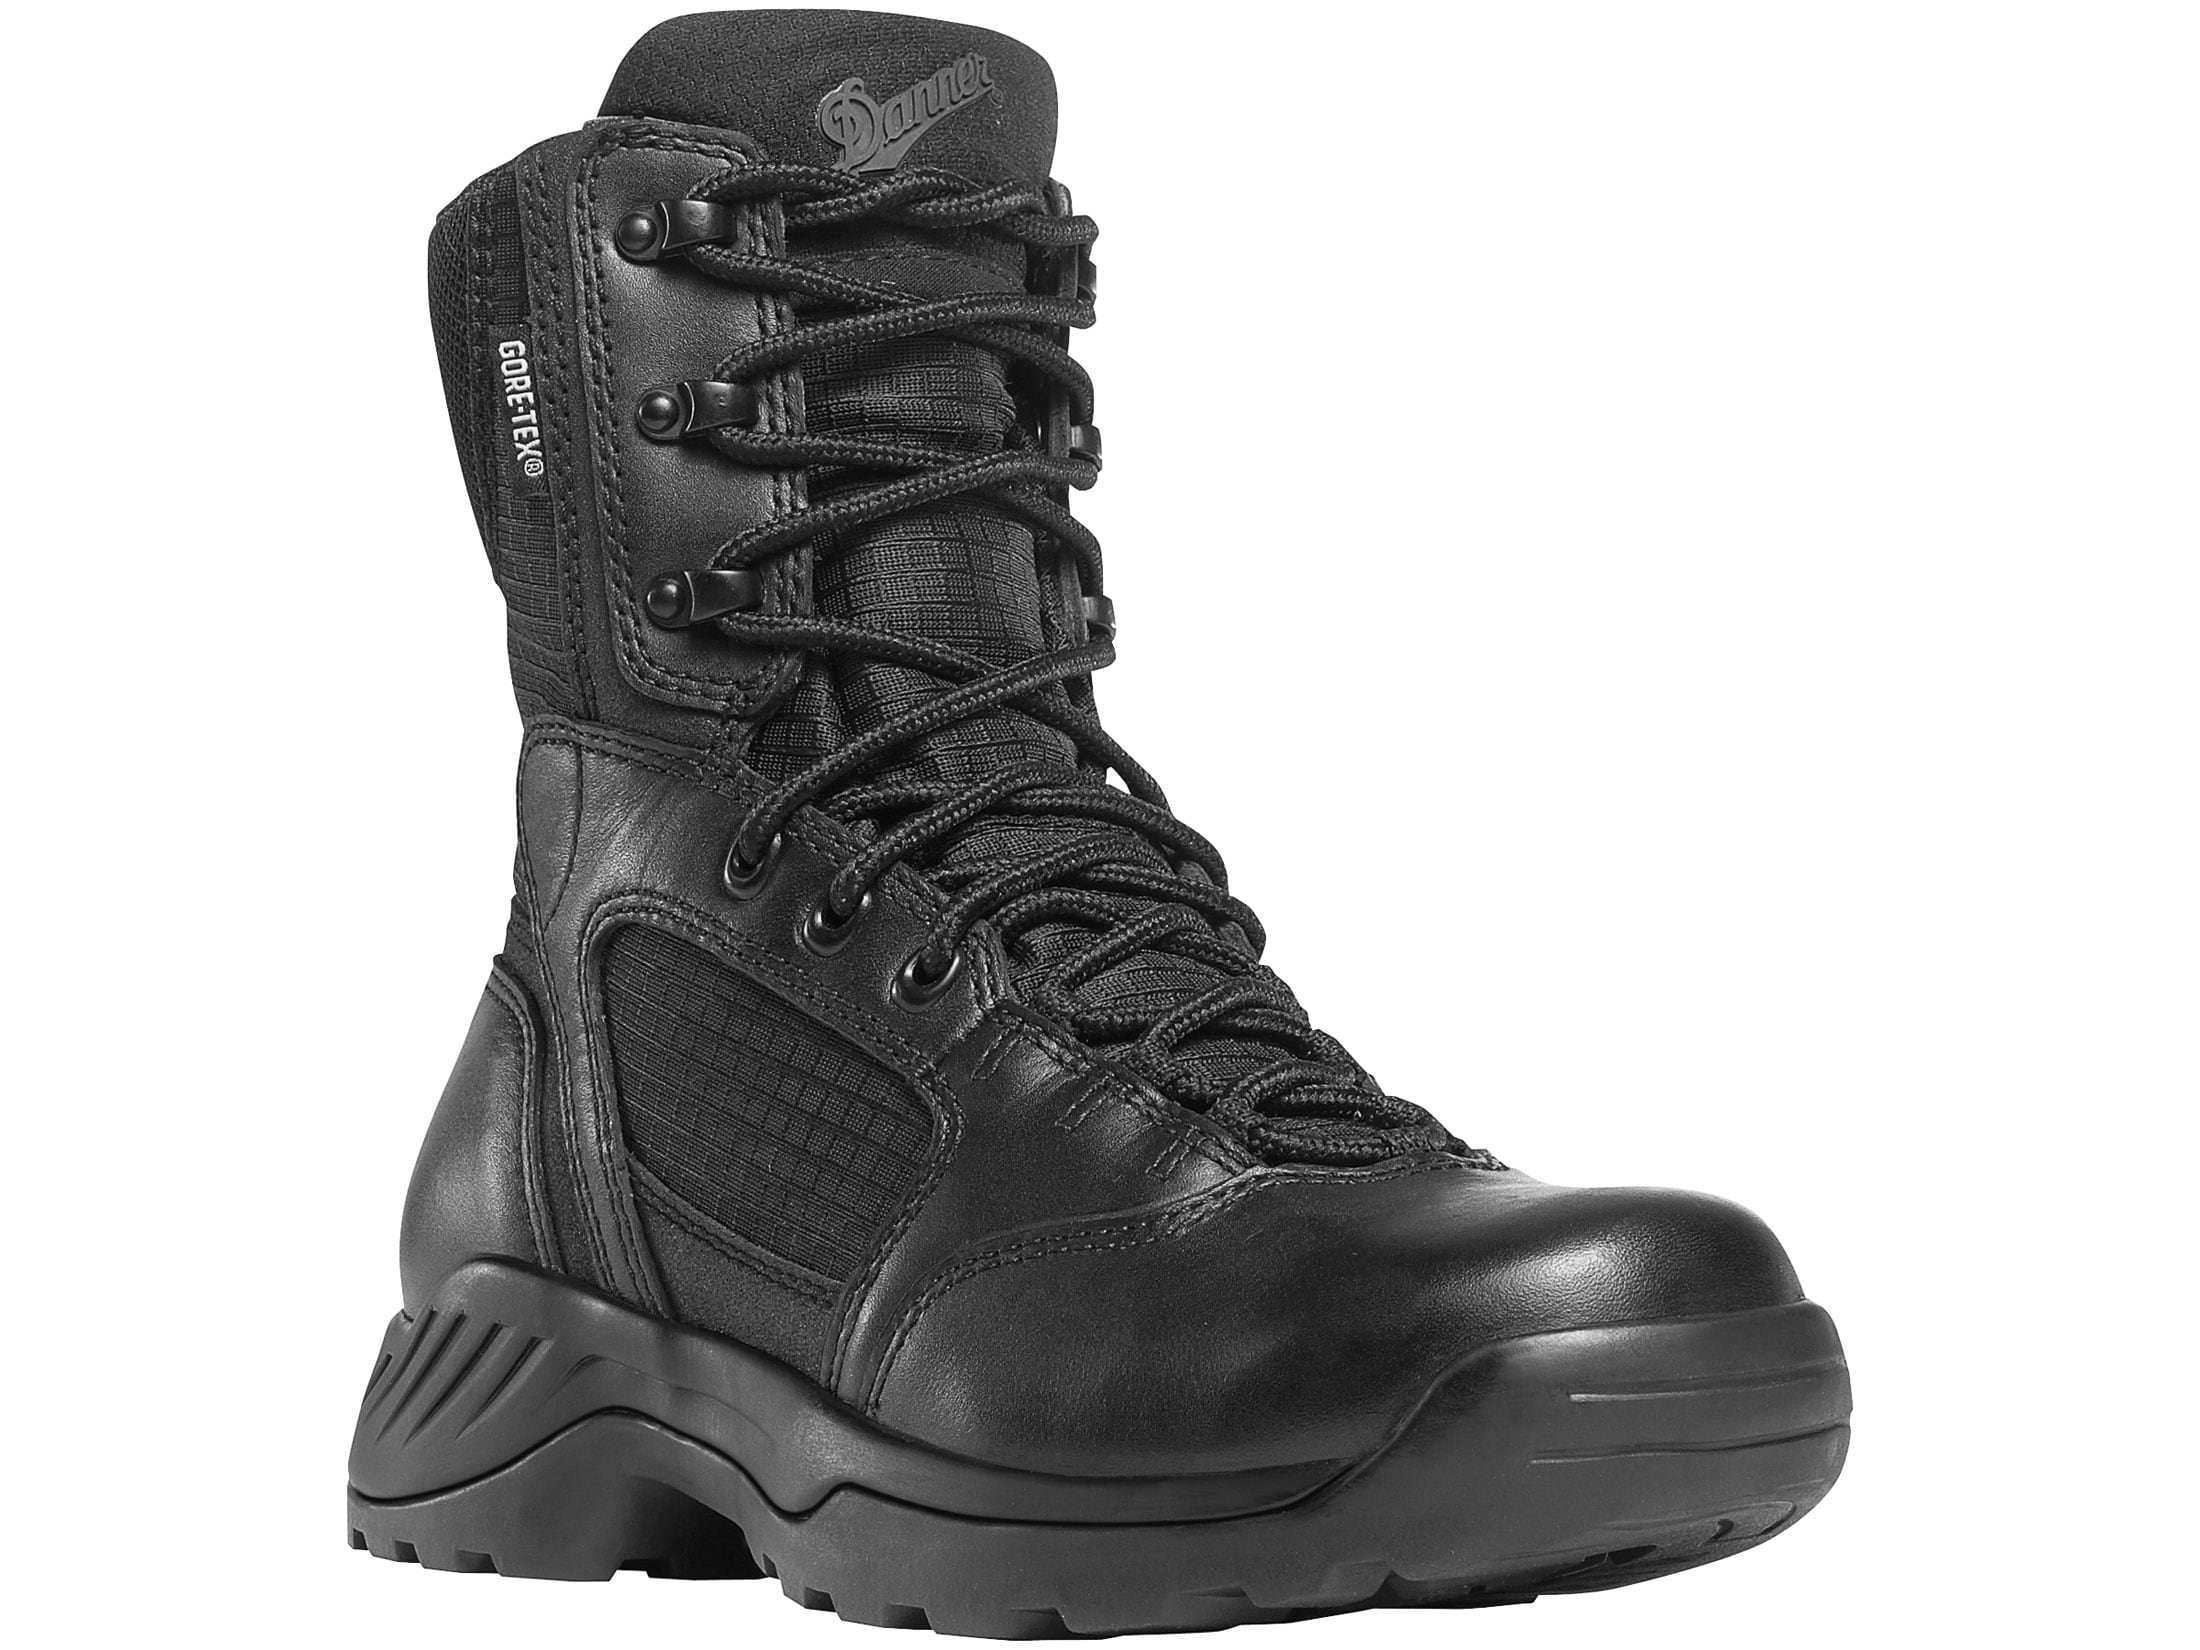 Danner Kinetic 8 GTX GORE-TEX Tactical Boots Leather Black Men's 9.5 D